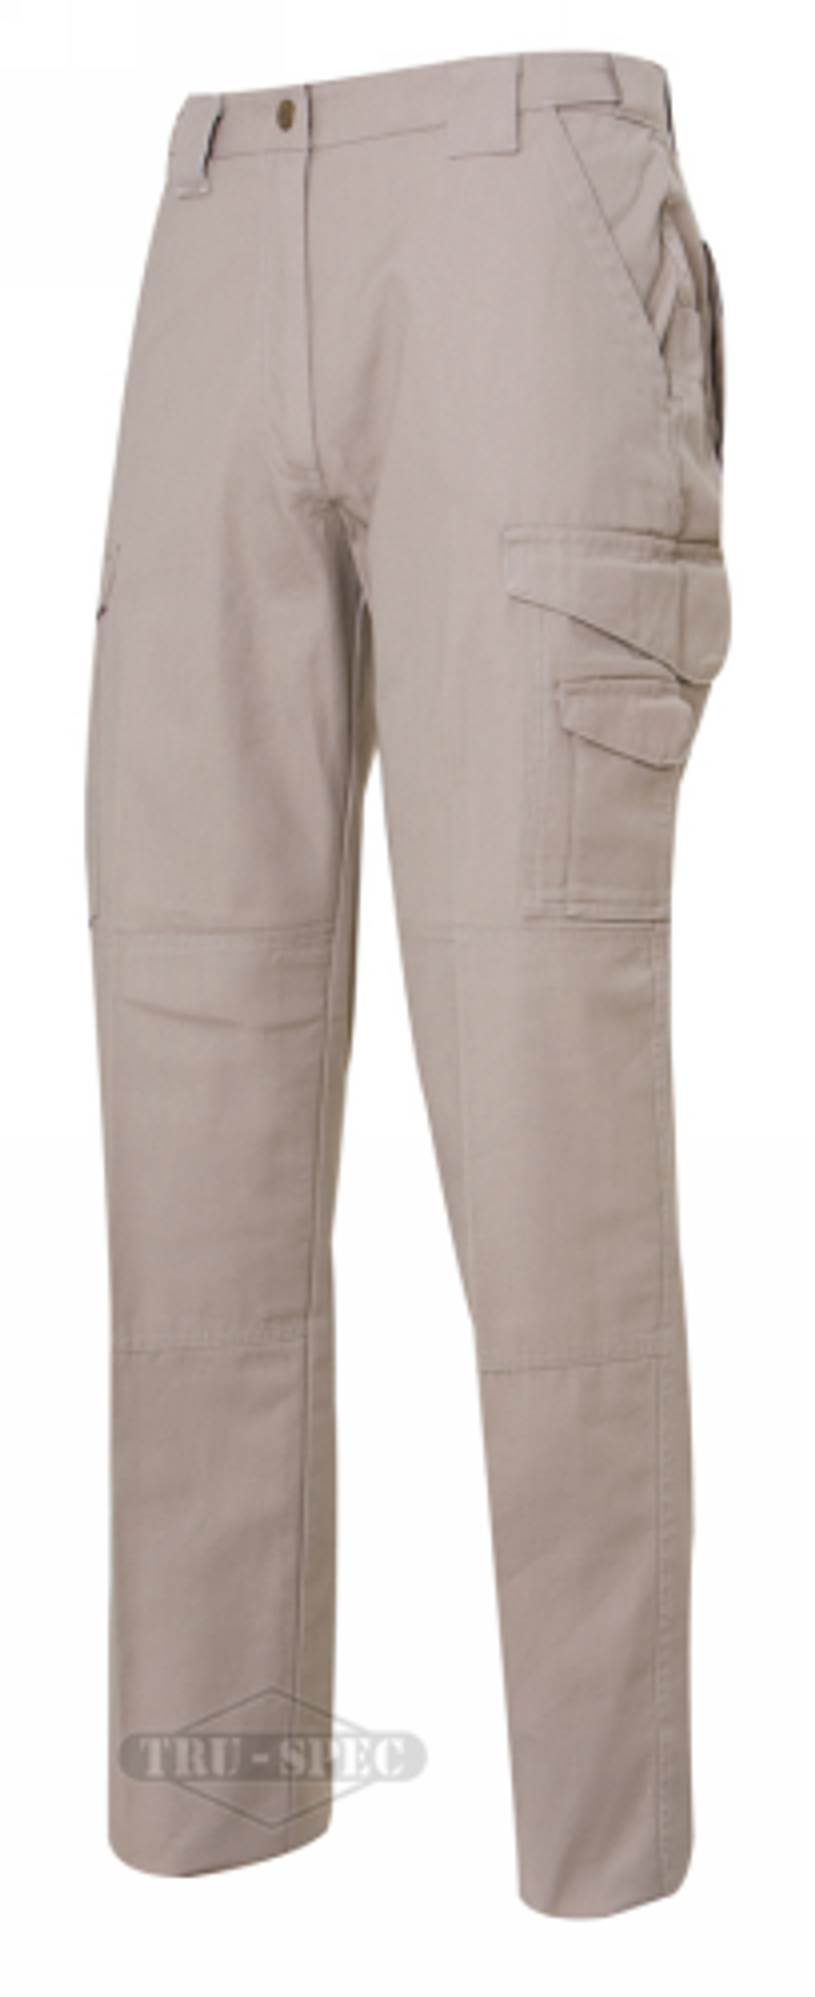 24-7 Women's Original Tactical Pants - KRTSP-1095004